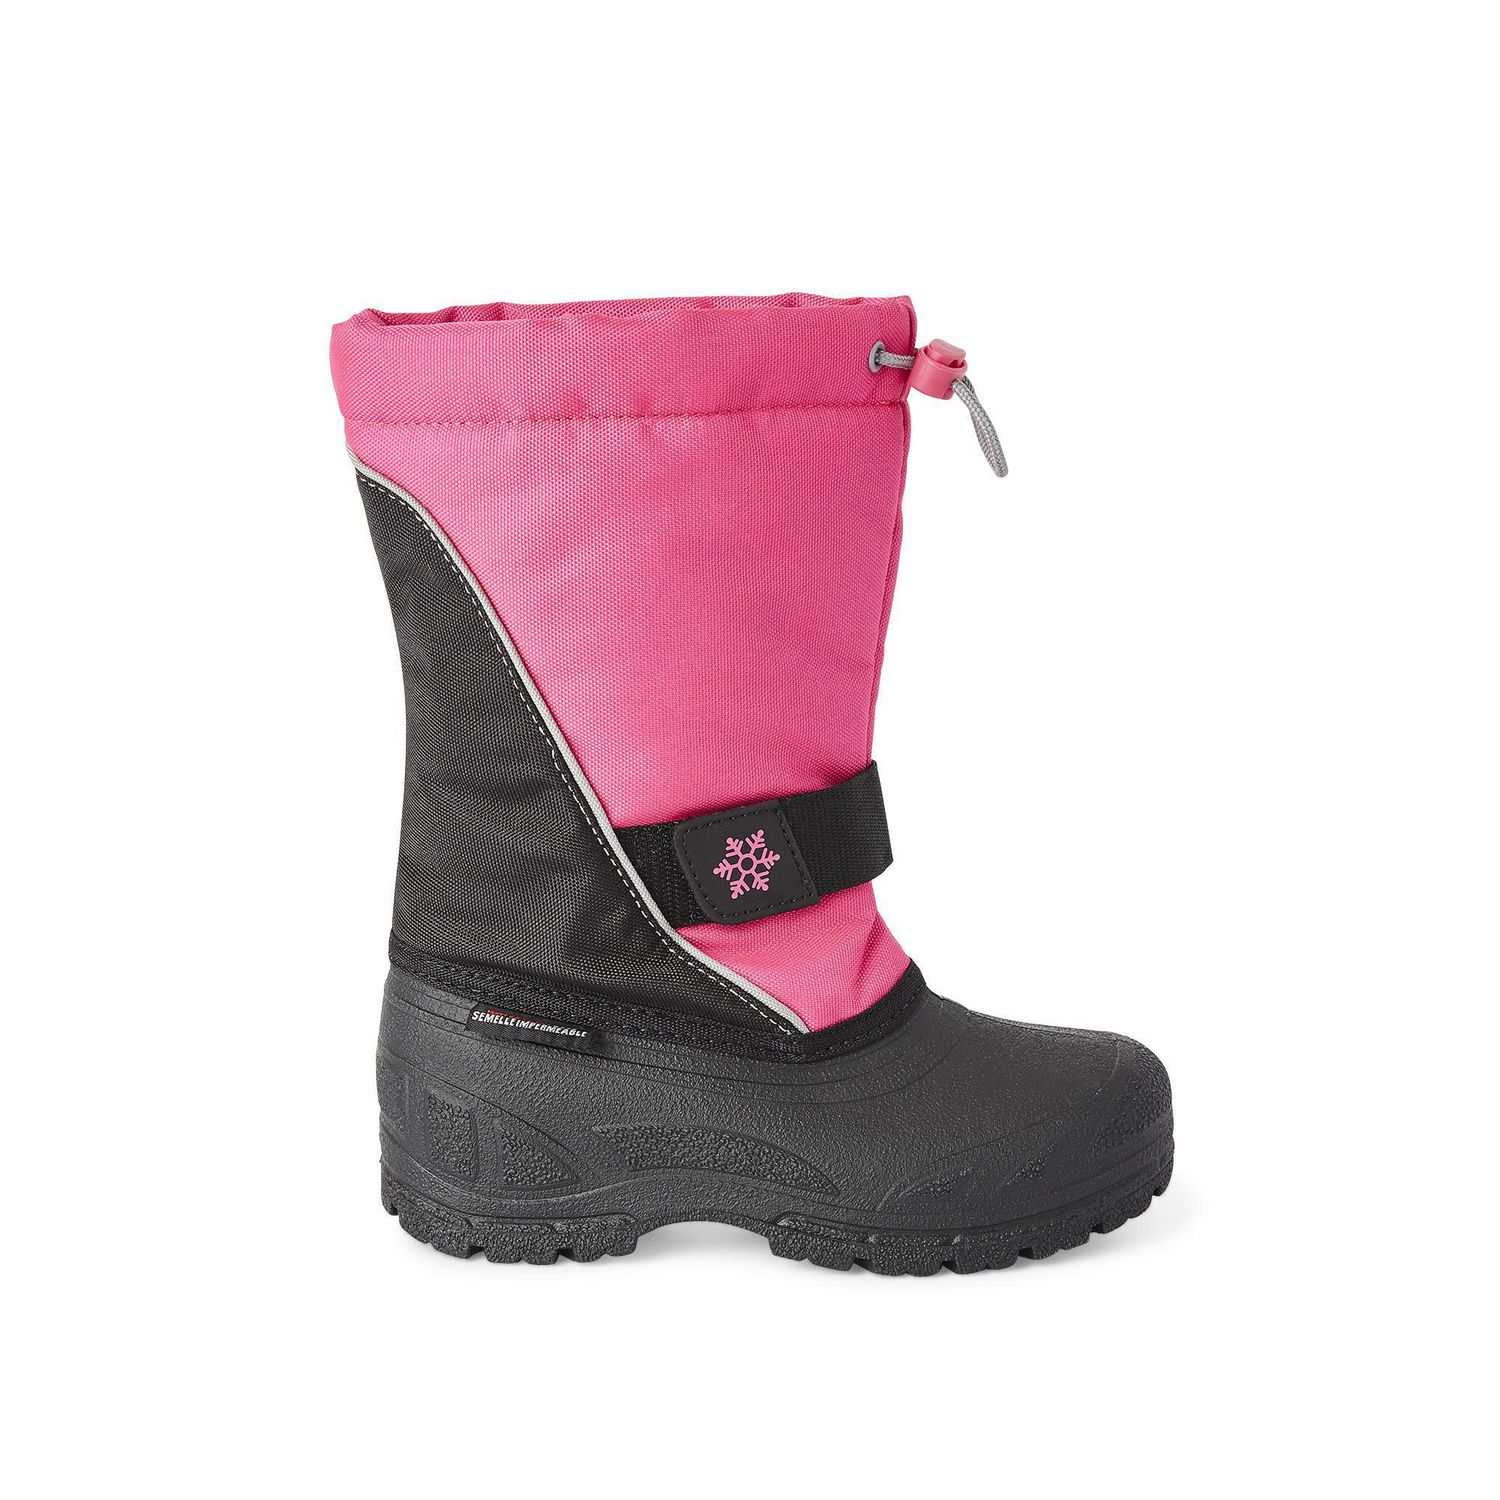 George Girls' Shanti Boots | Walmart Canada